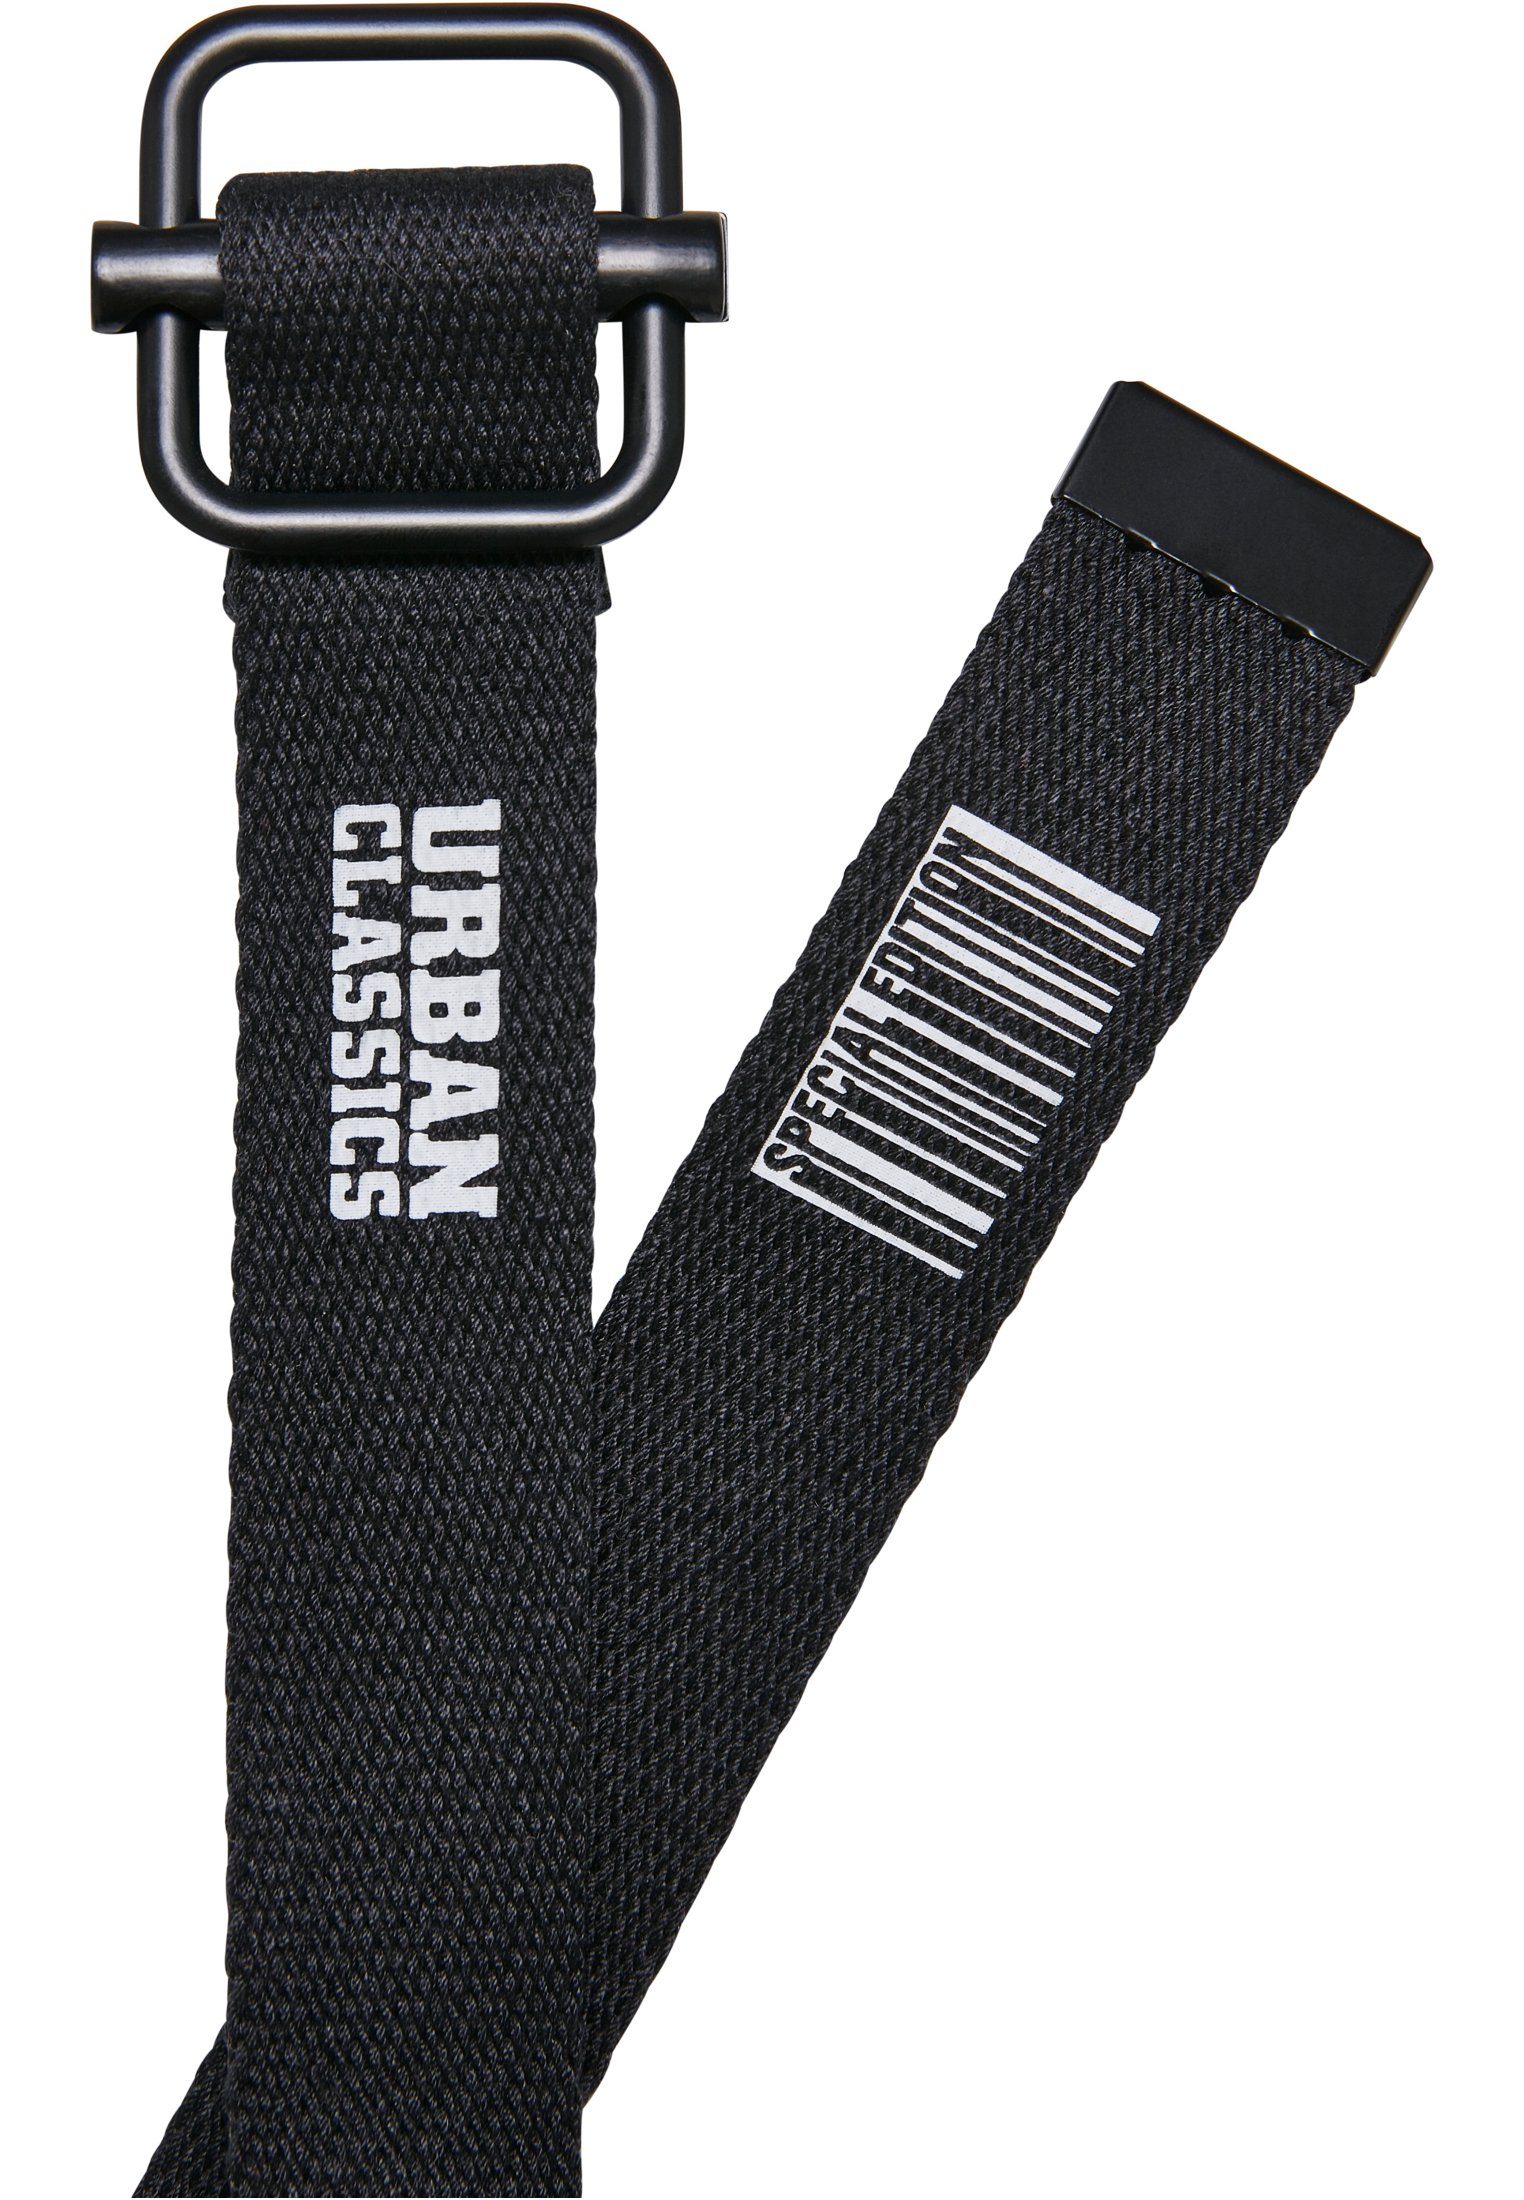 URBAN CLASSICS Industrial Accessoires 2-Pack Kids Belt black-green Canvas Hüftgürtel